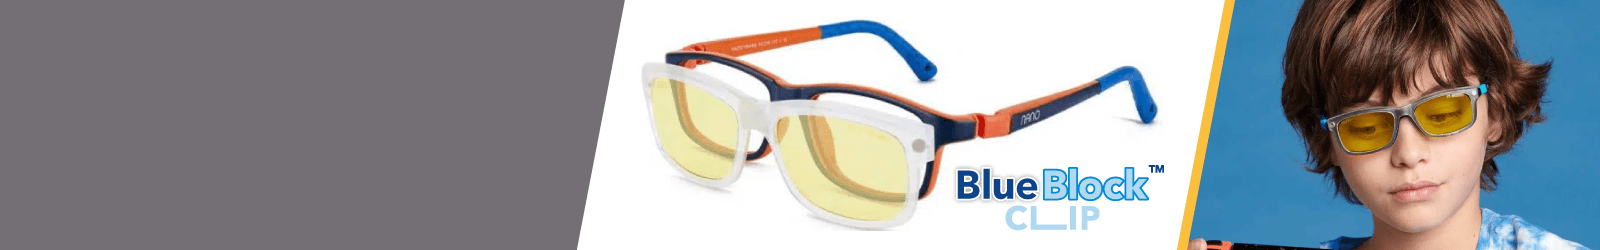 Fuchsia Nano Blue Block Clip Eyewear for Kids